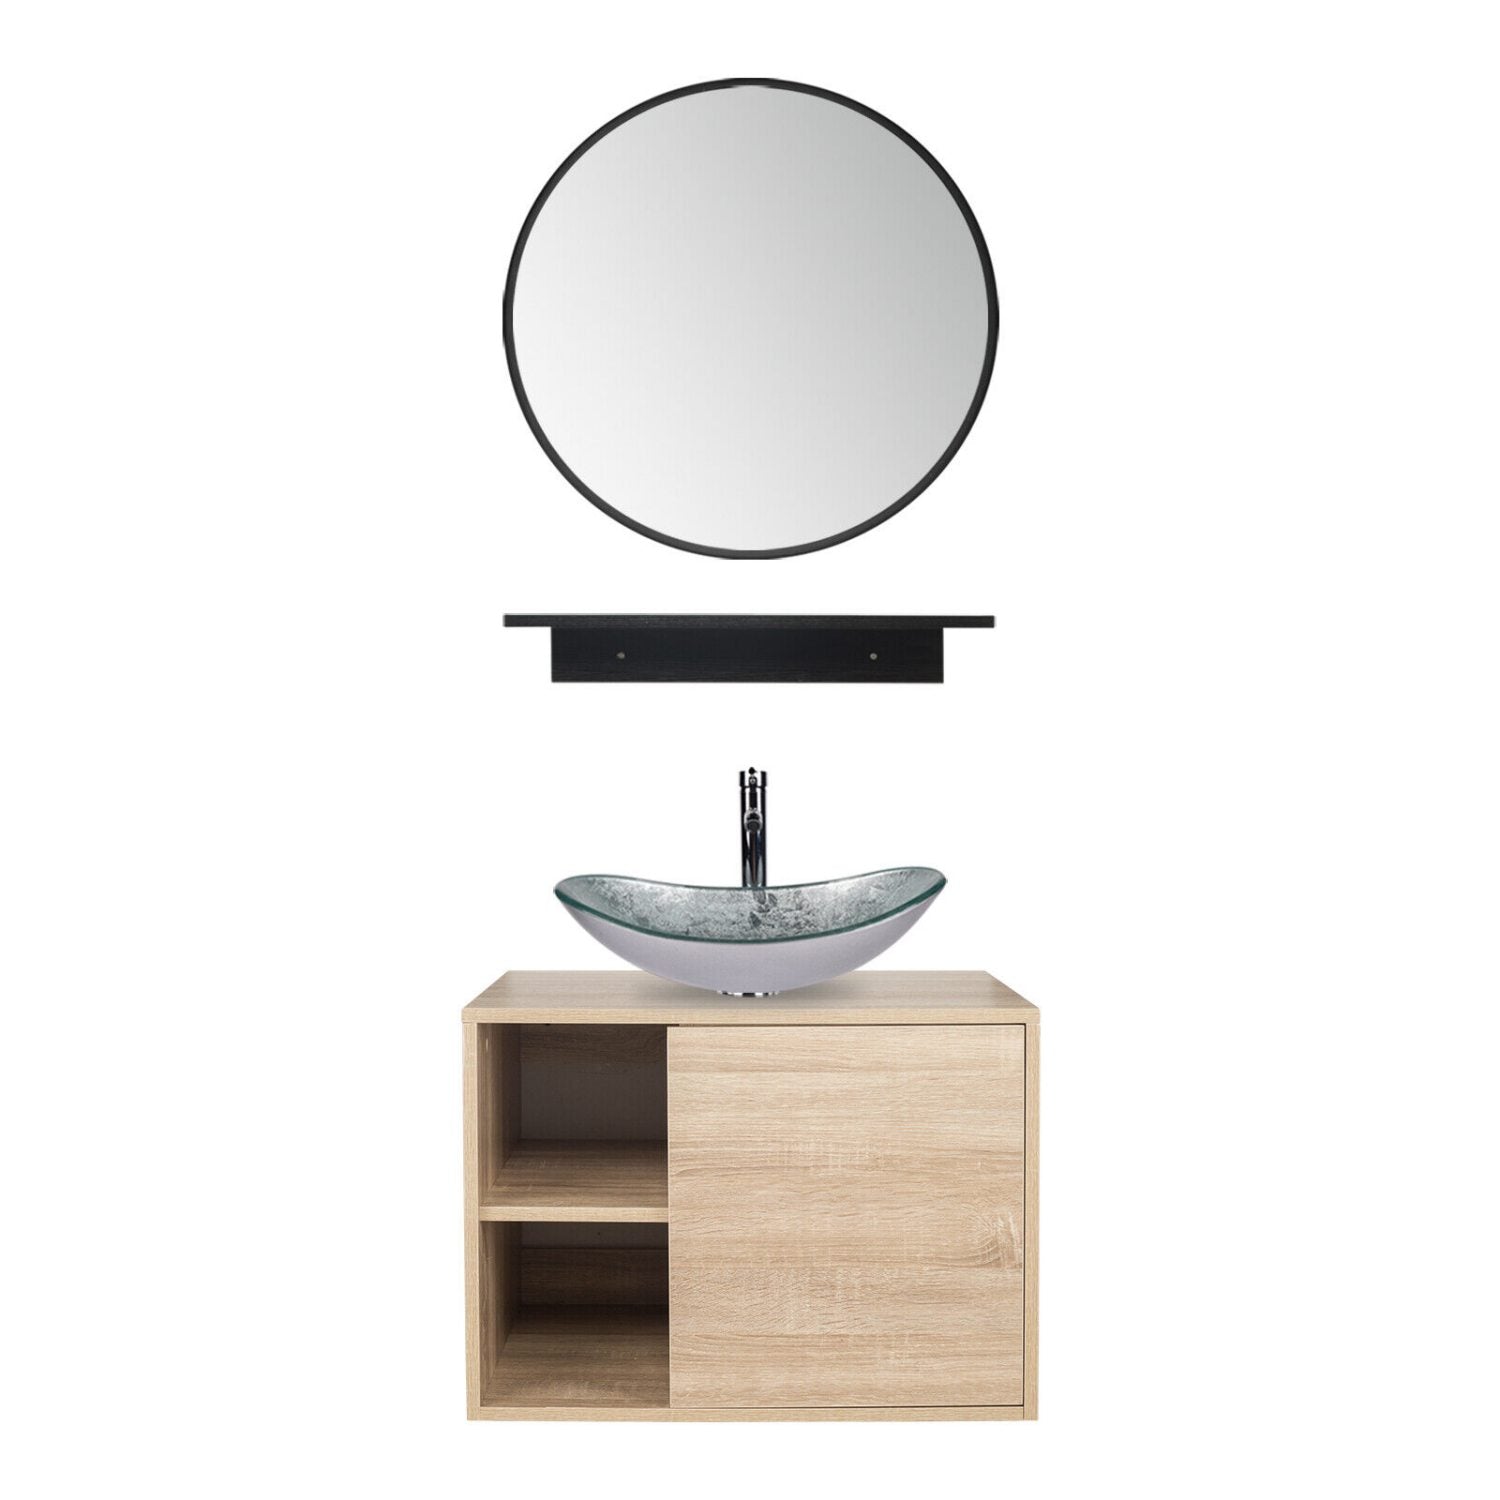 Elecwish Vanity With Sliver Boat Sink Bathroom Vanity Wall Mounted Cabinet Glass Sink Mirror Combo